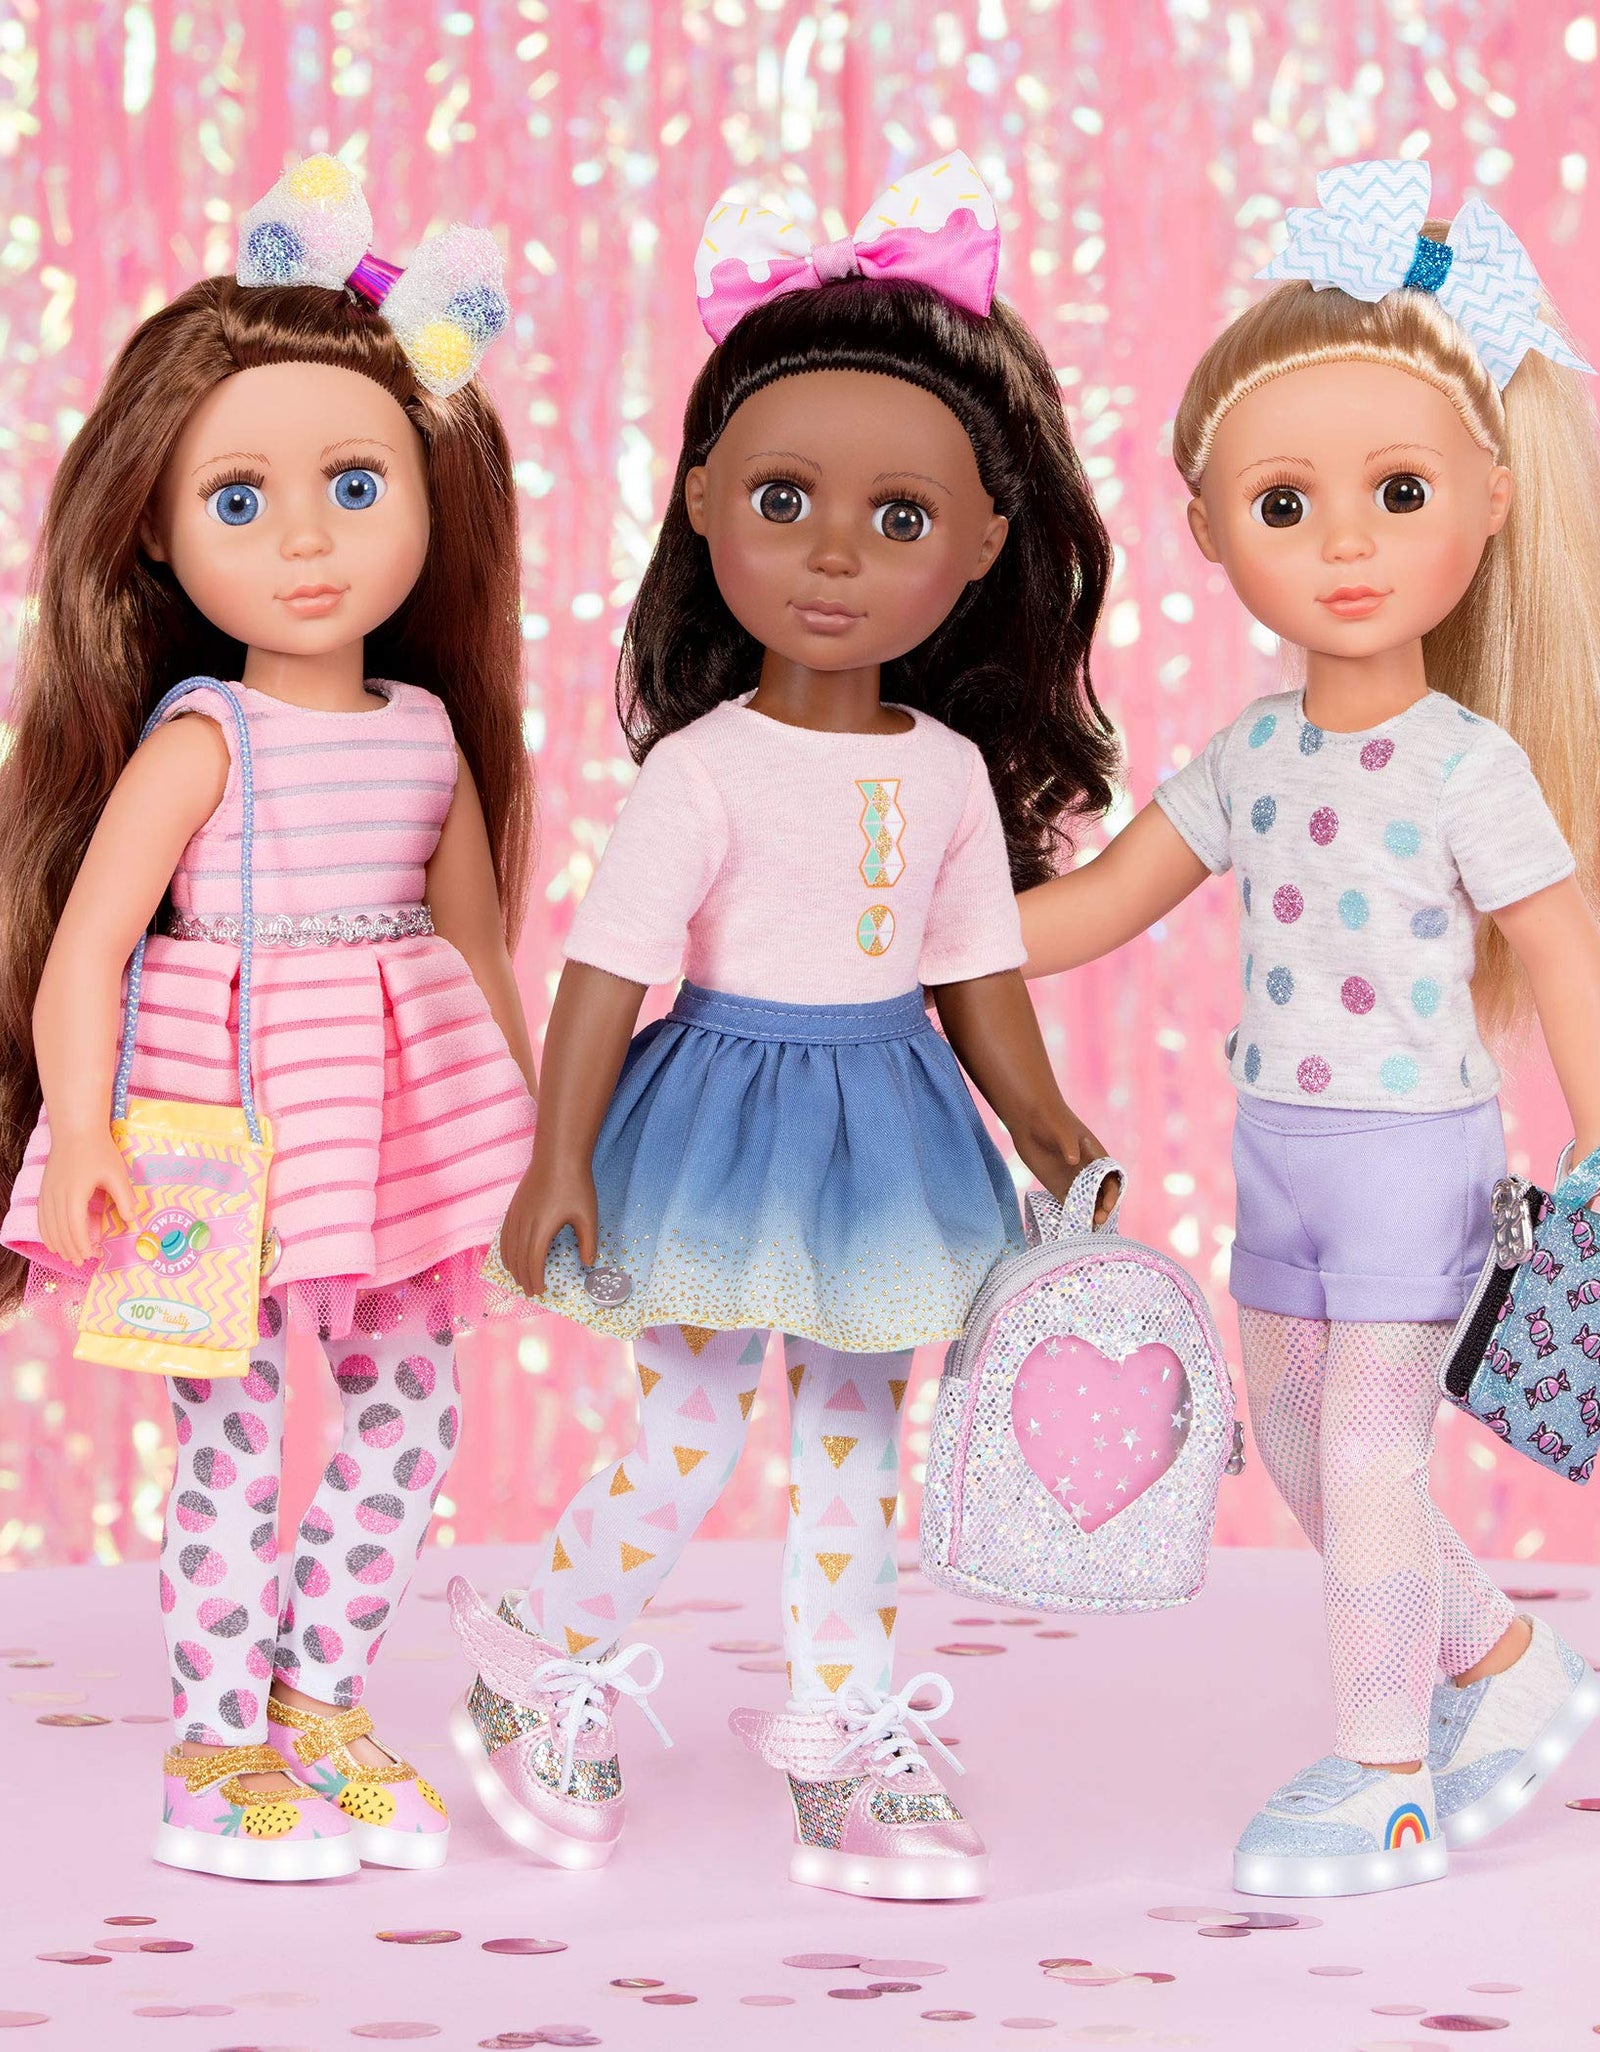 Glitter Girls Dolls by Battat - Keltie 14" Poseable Fashion Doll - Dolls for Girls Age 3 & Up